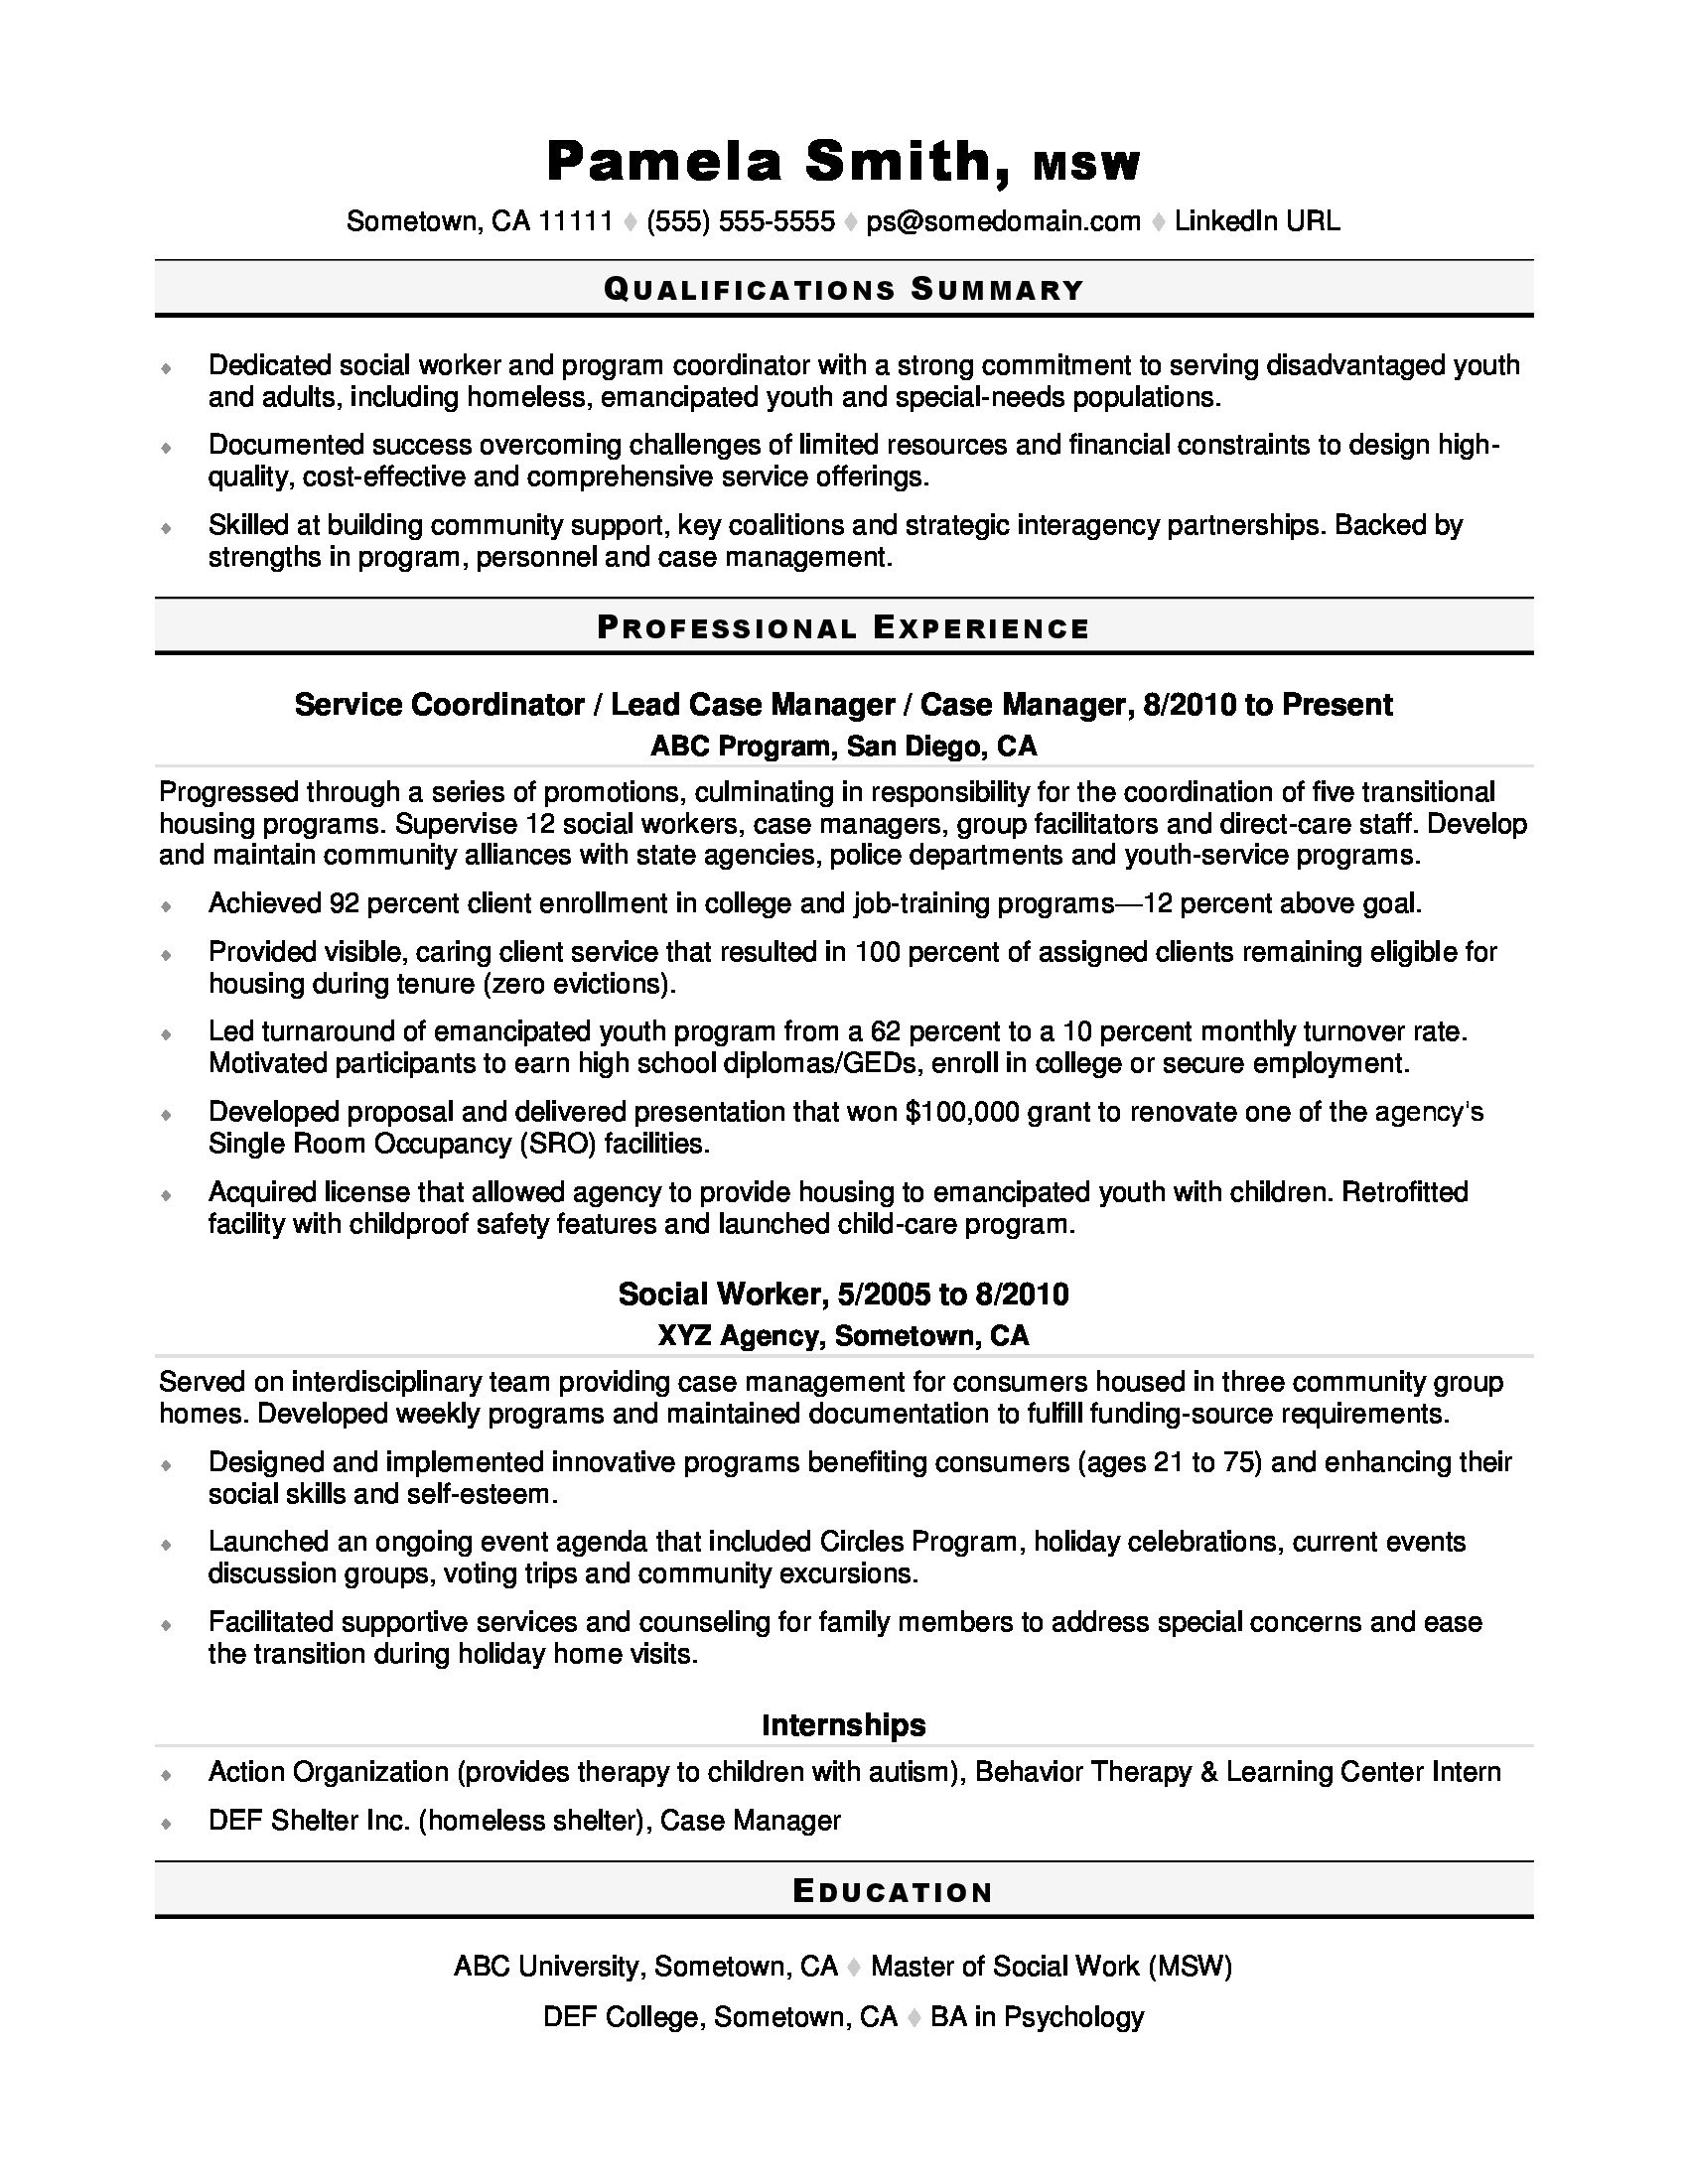 Recent Gradute Resume Samples for social Workers social Work Resume Monster.com